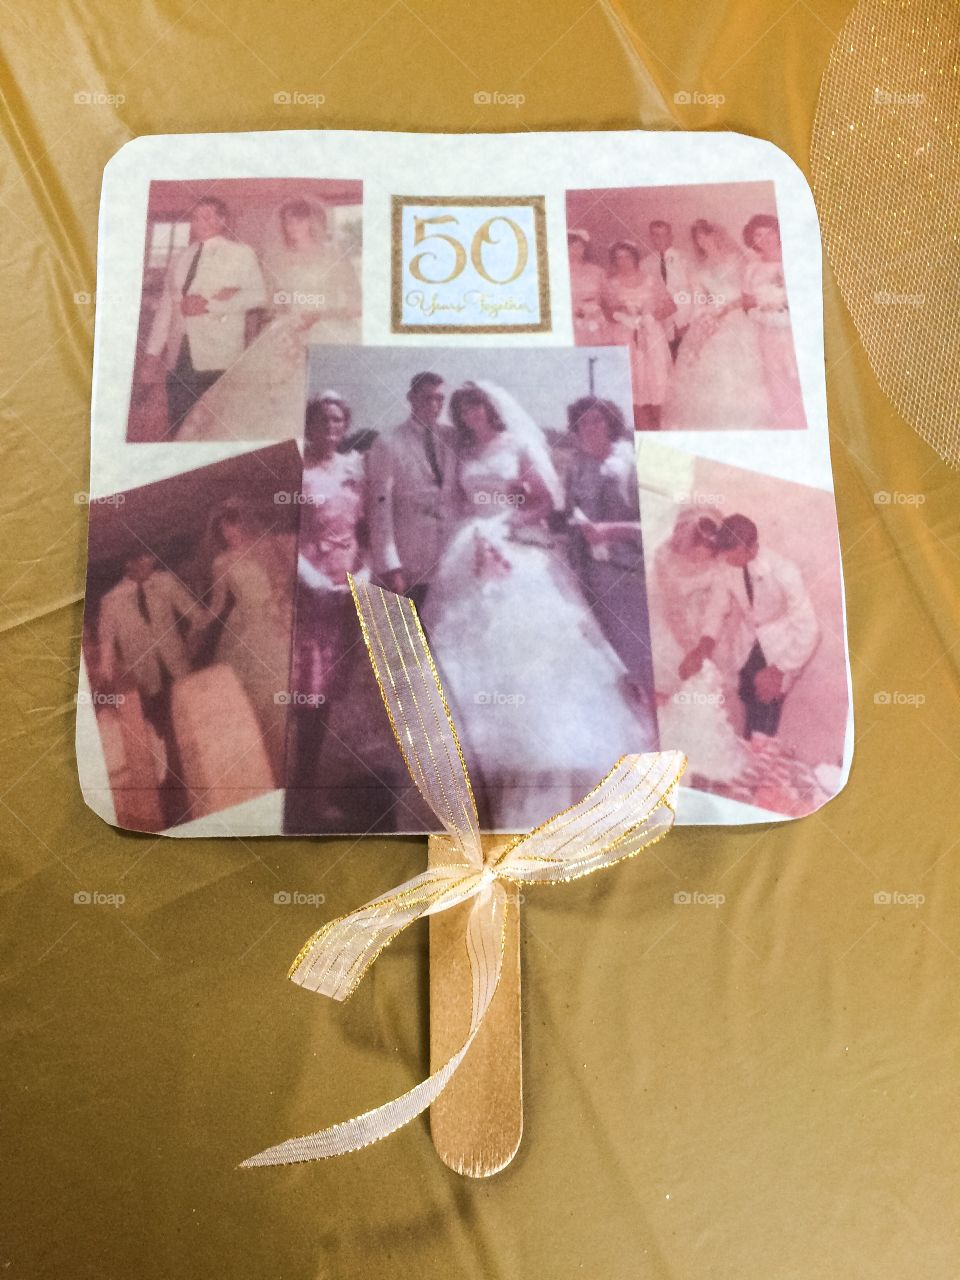 50 yr wedding anniversary fan made of memories 